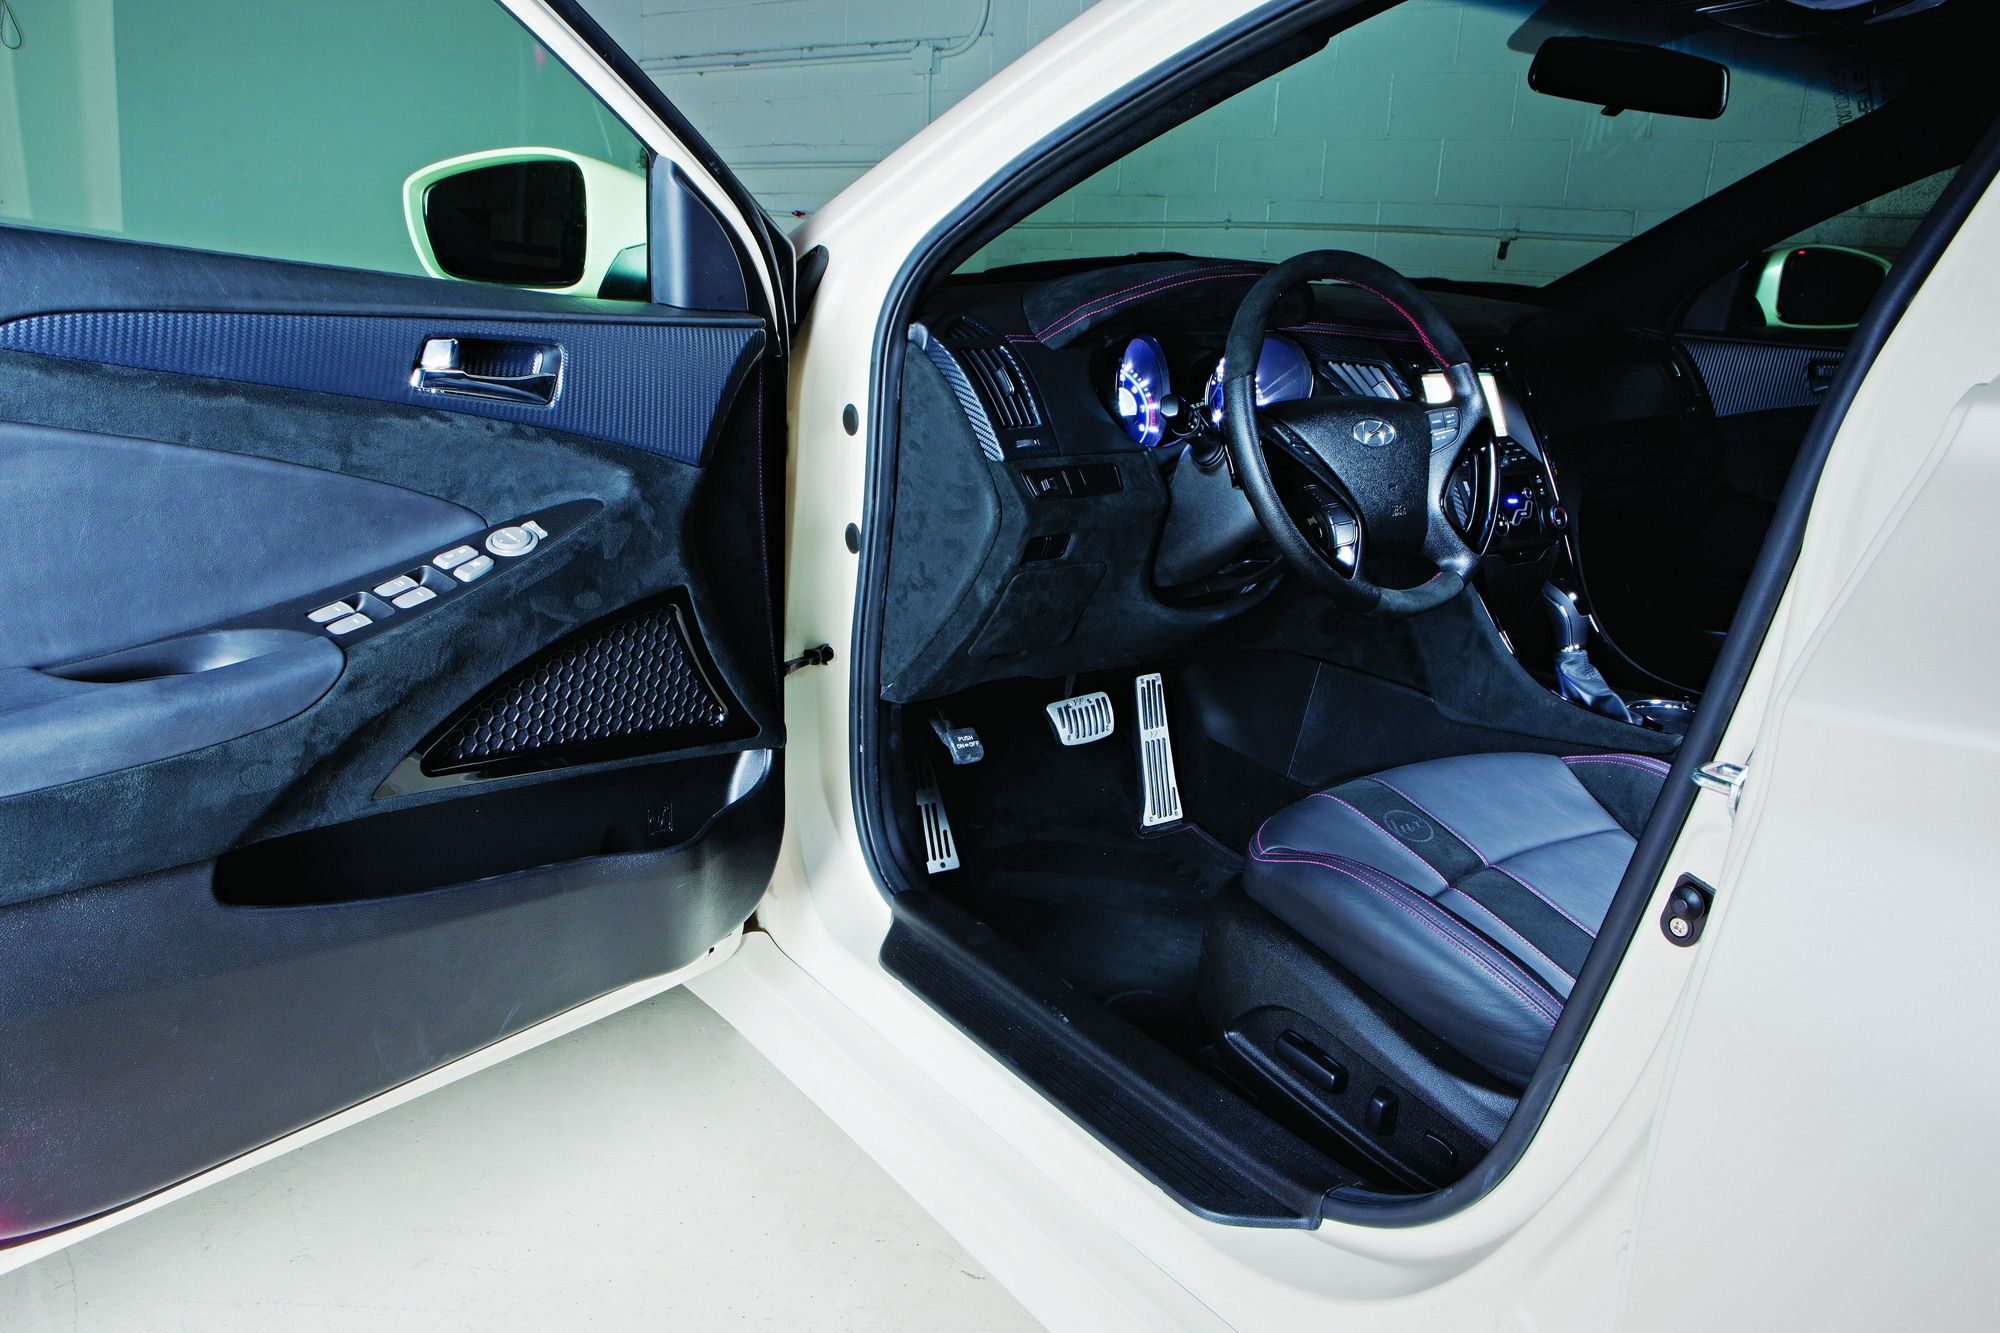 2010 Hyundai Sonata 2.0T by Rides Magazine